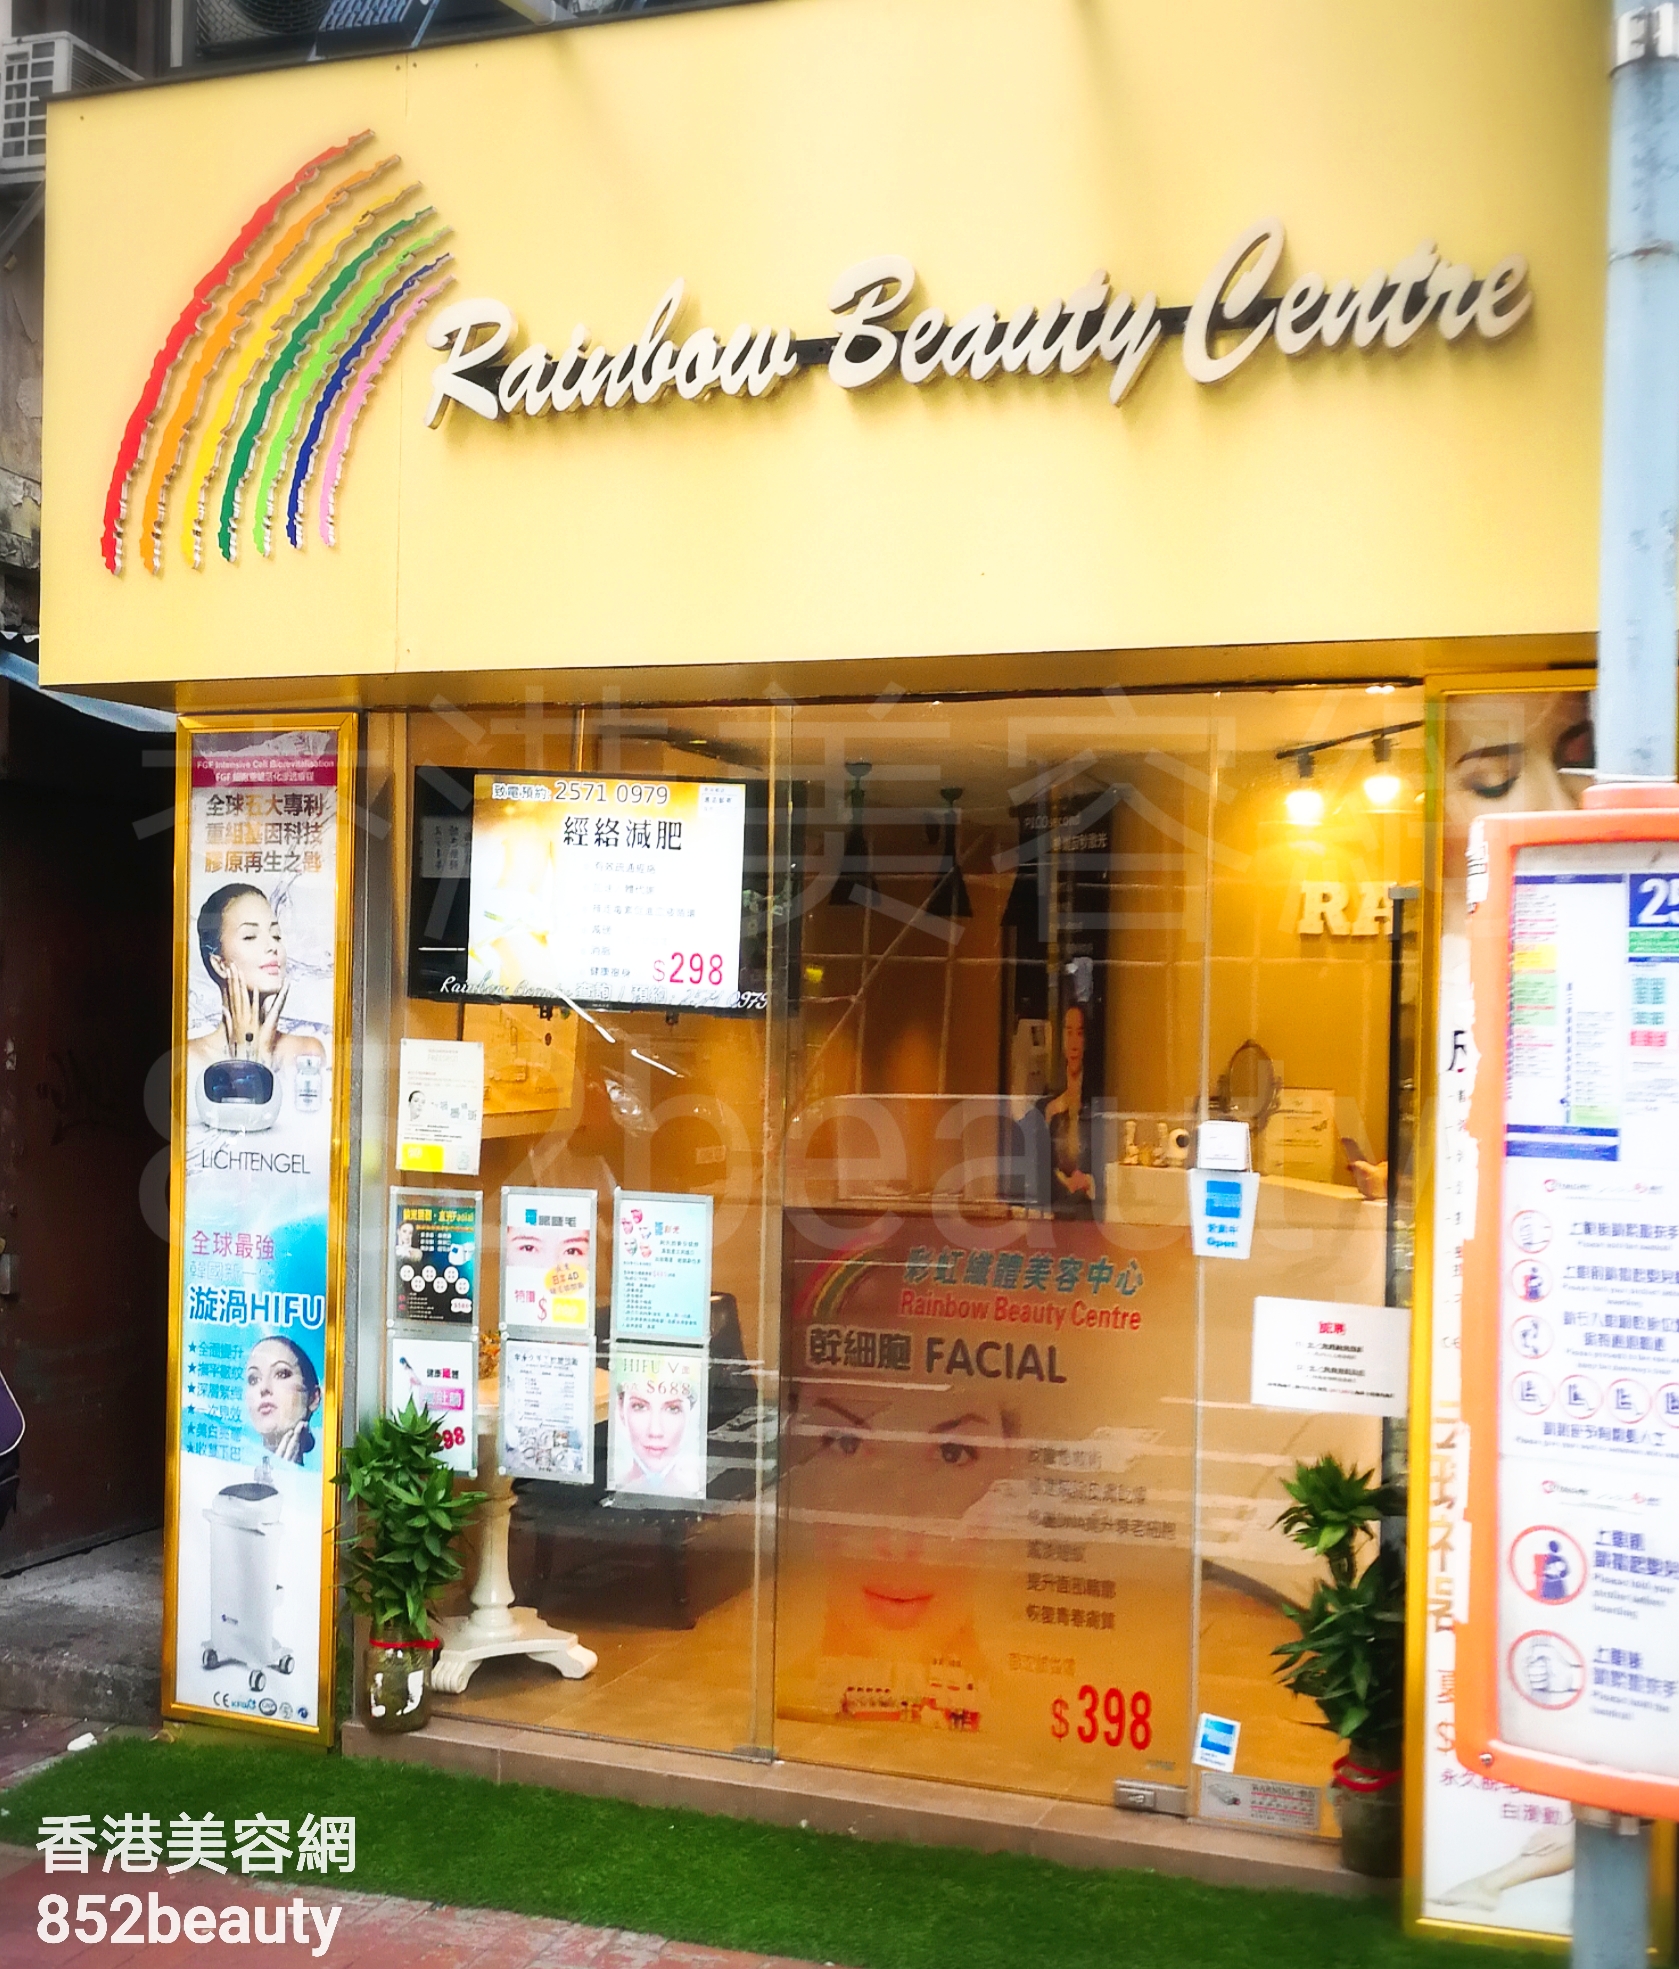 Slimming: Rainbow Beauty Centre